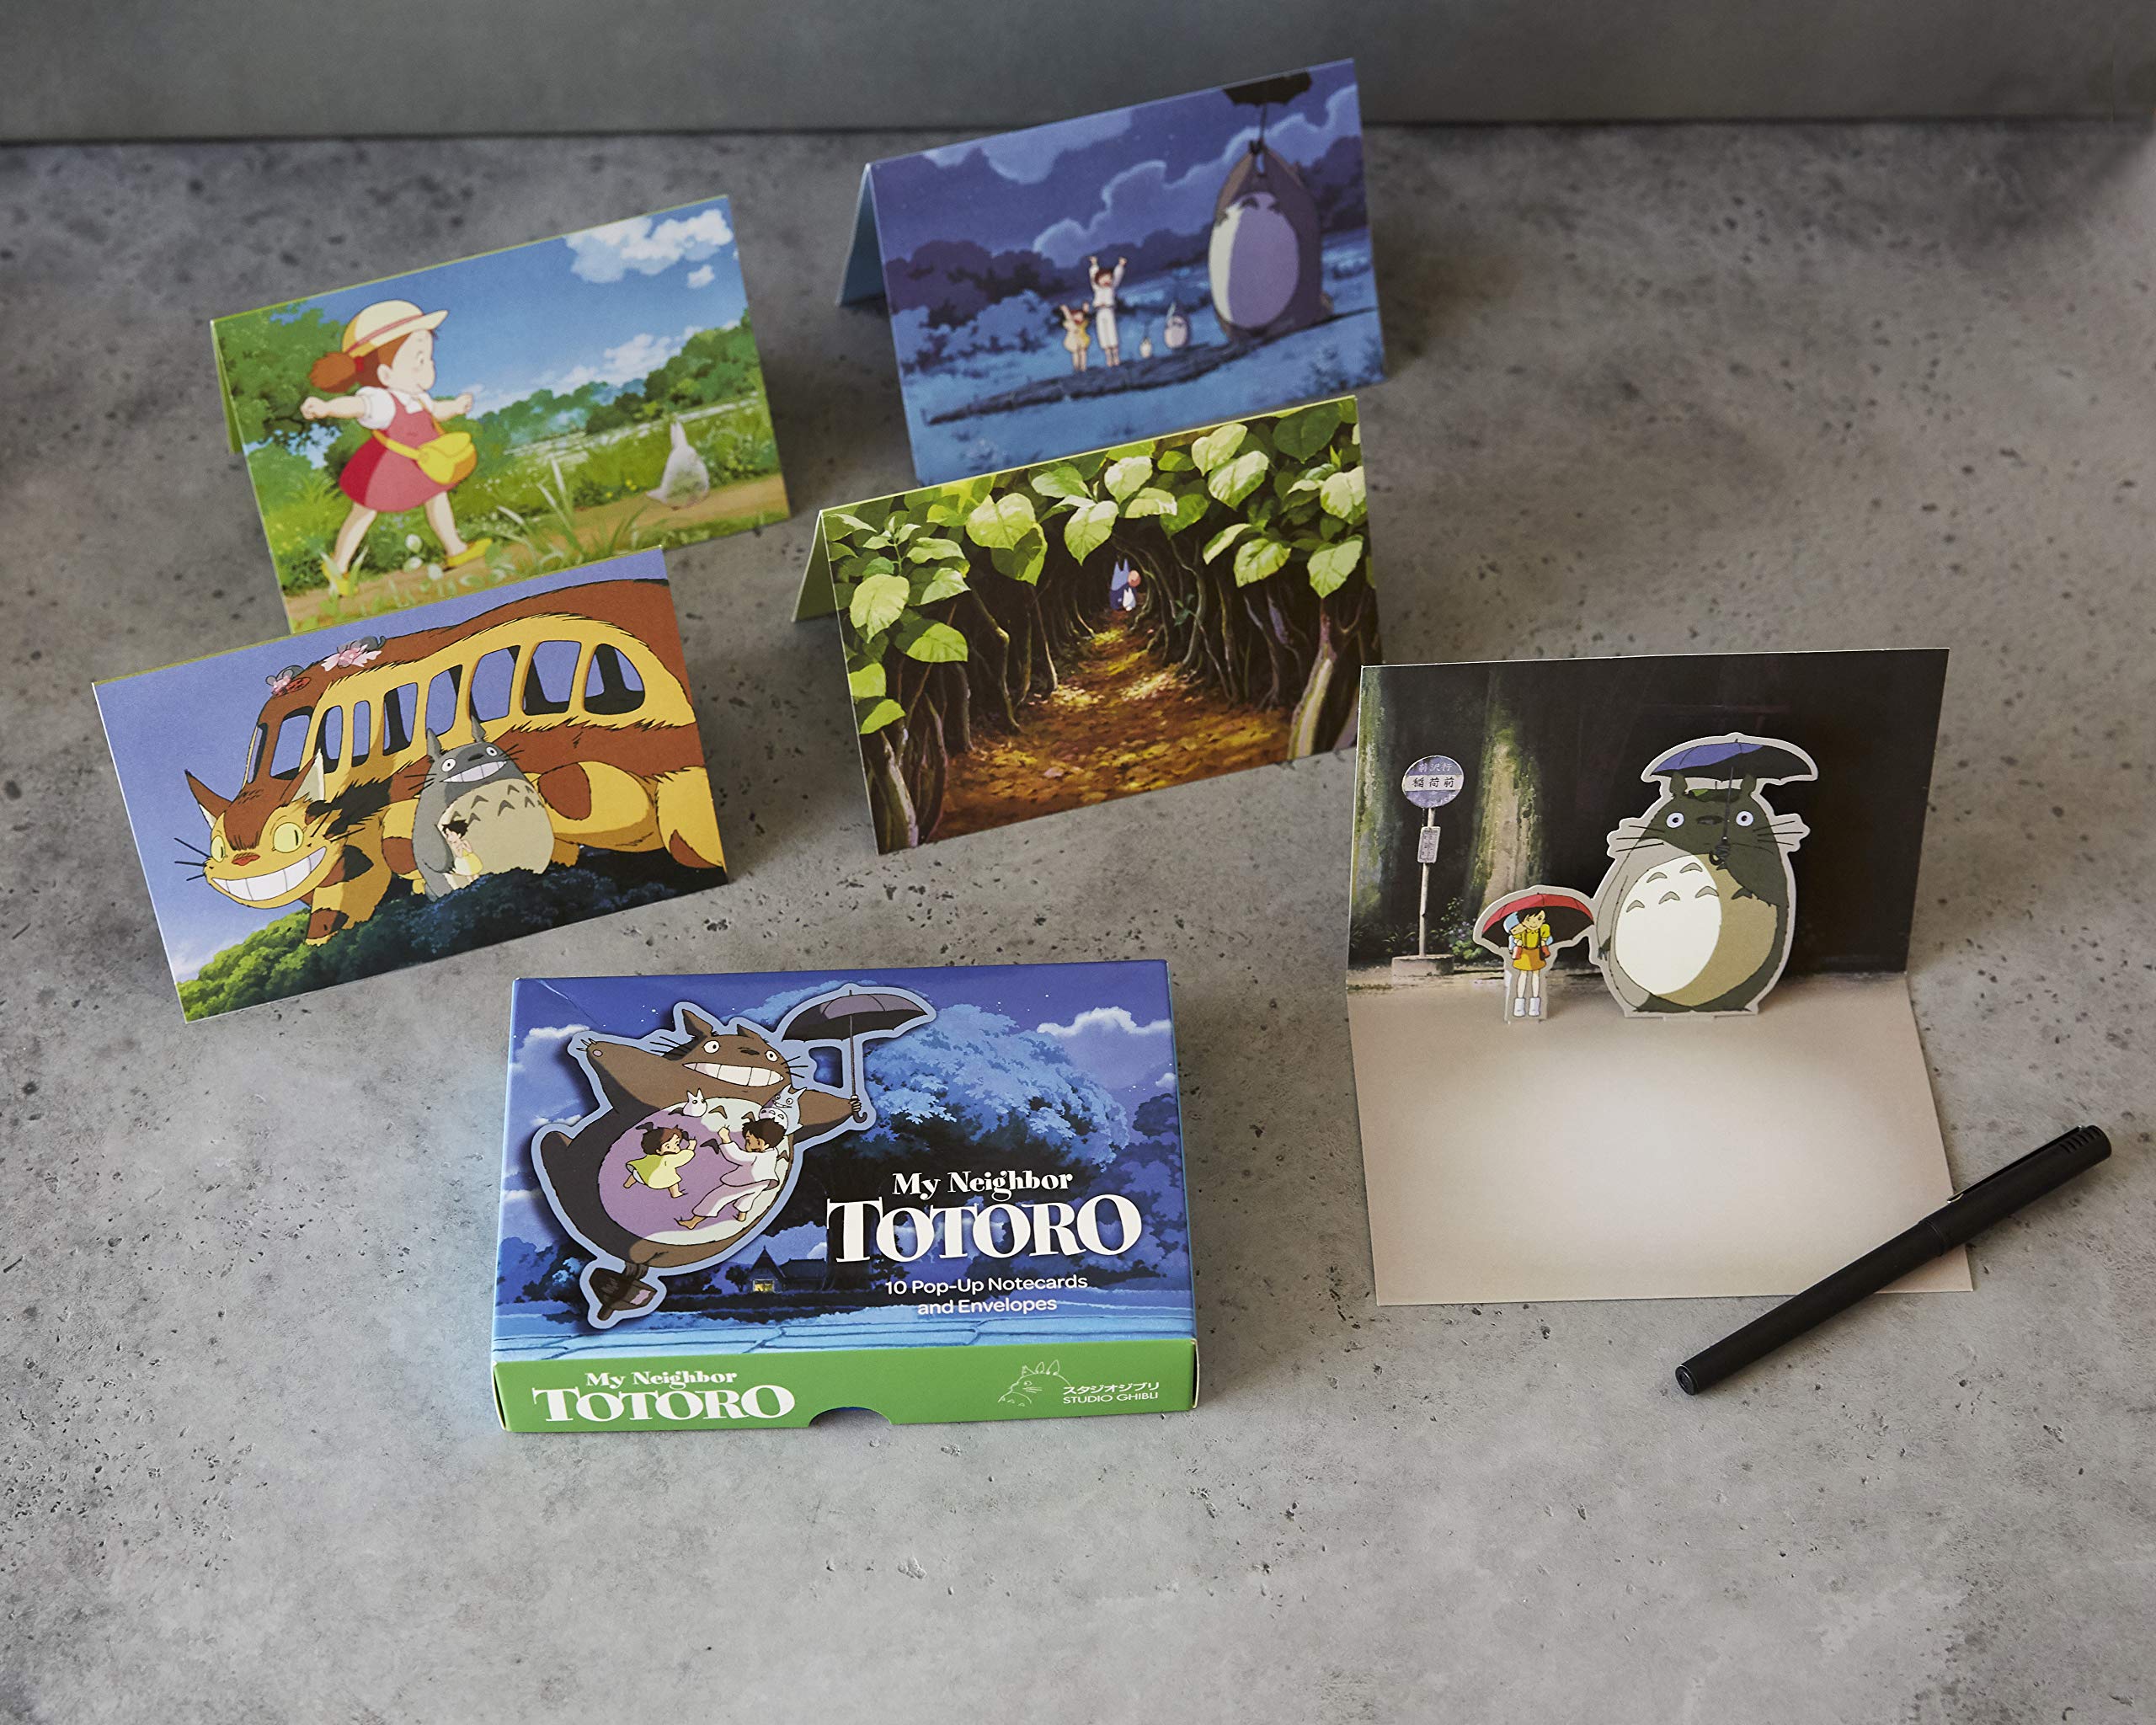 My Neighbor Totoro: 10 Pop-Up Notecards and Envelopes (Totoro Products, Studio Ghibli Products, Totoro Art)